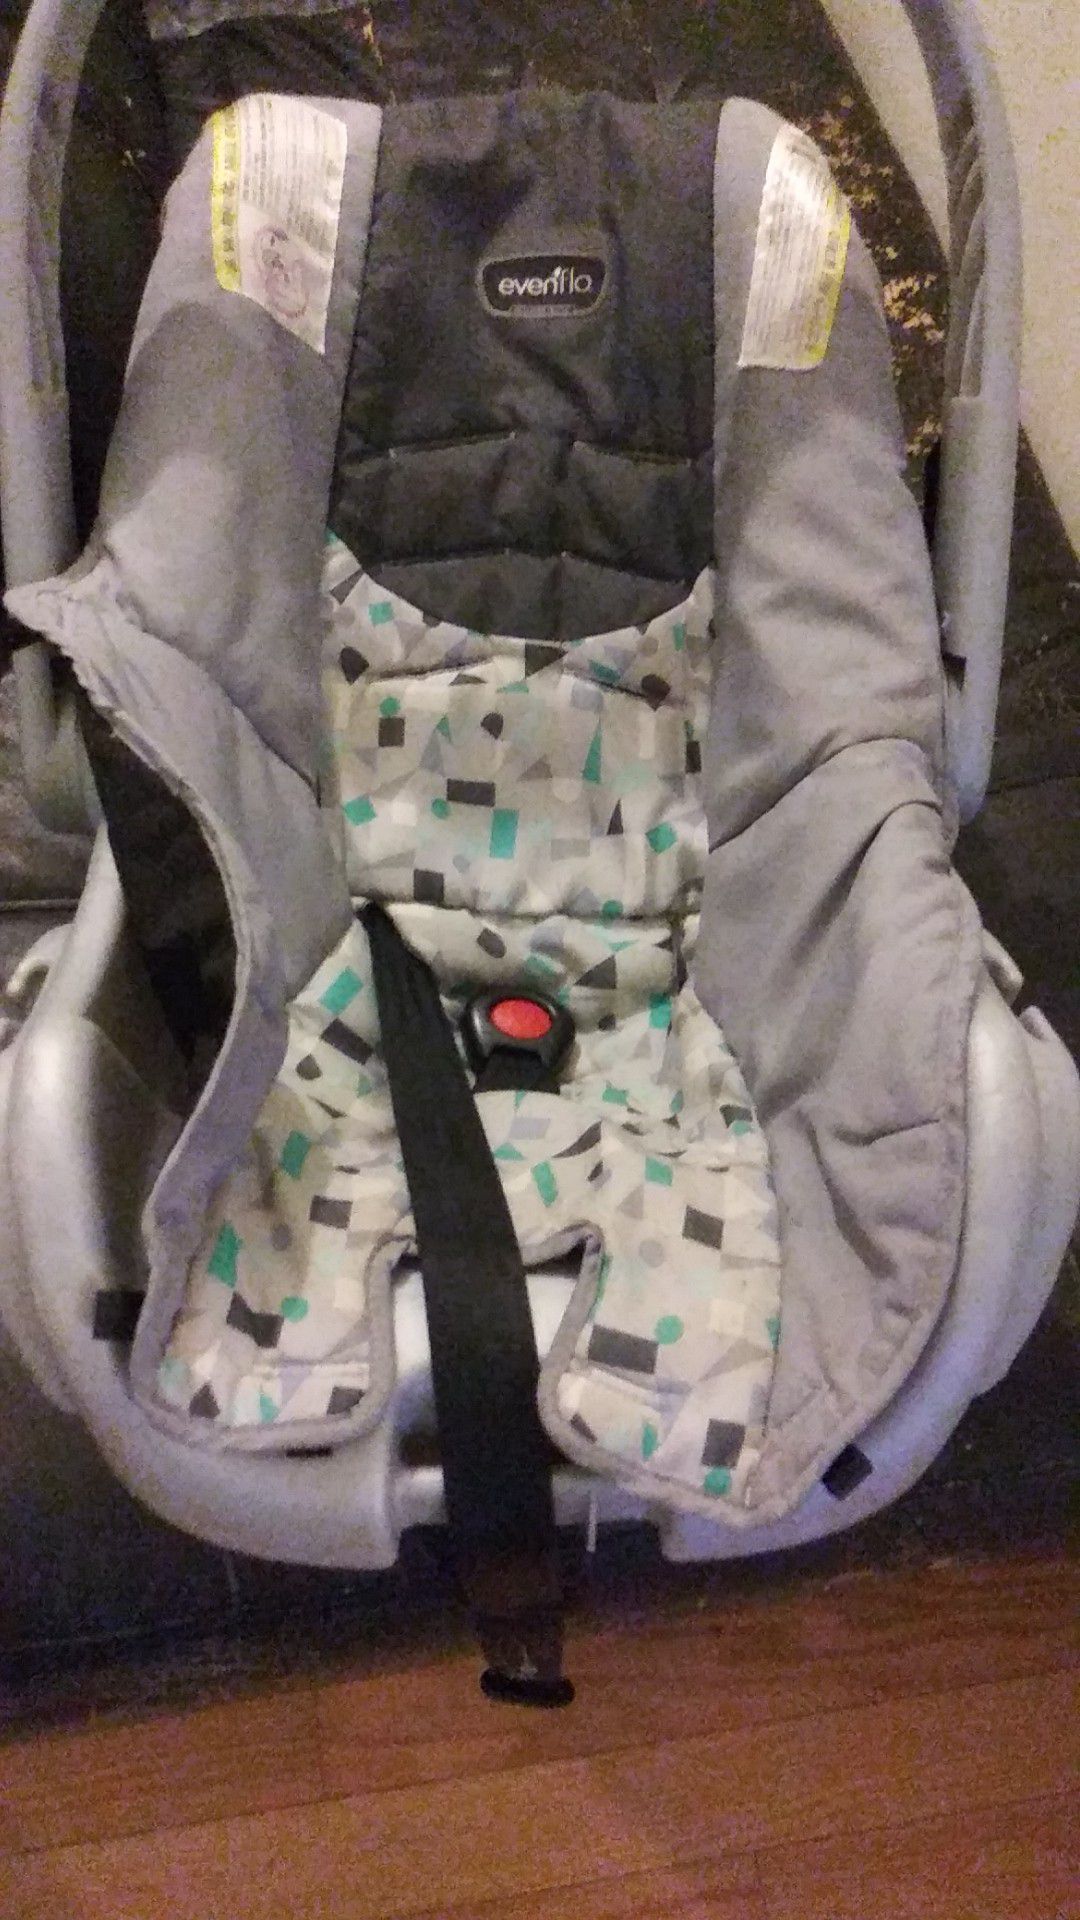 Infant car seat $10